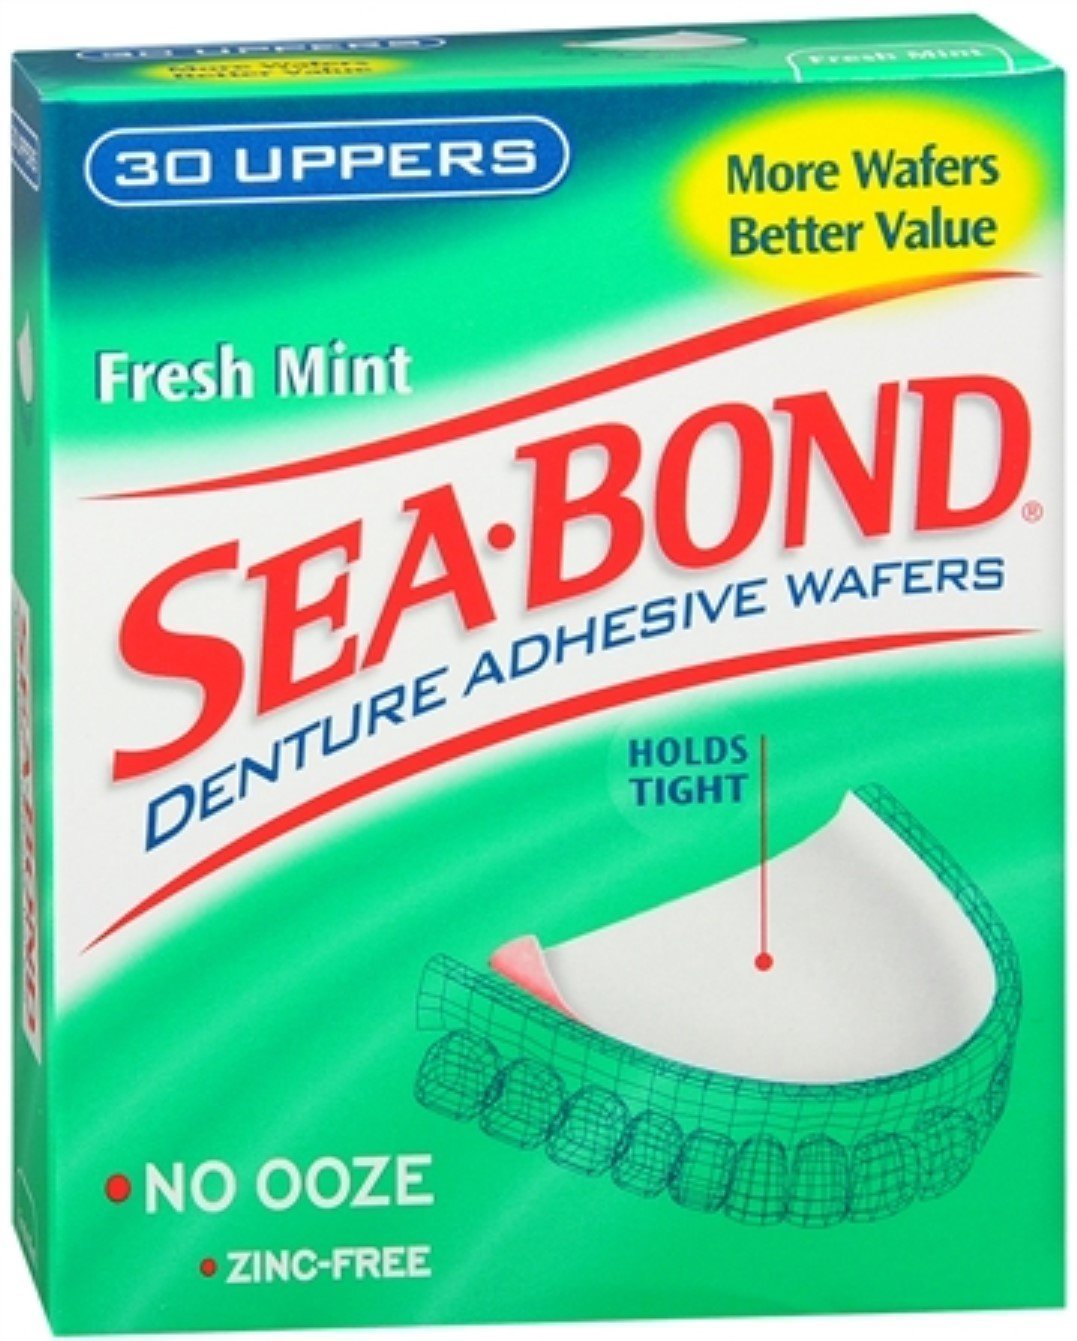 SEA-BOND Denture Adhesive Seals Uppers Fresh Mint, 30 [...]